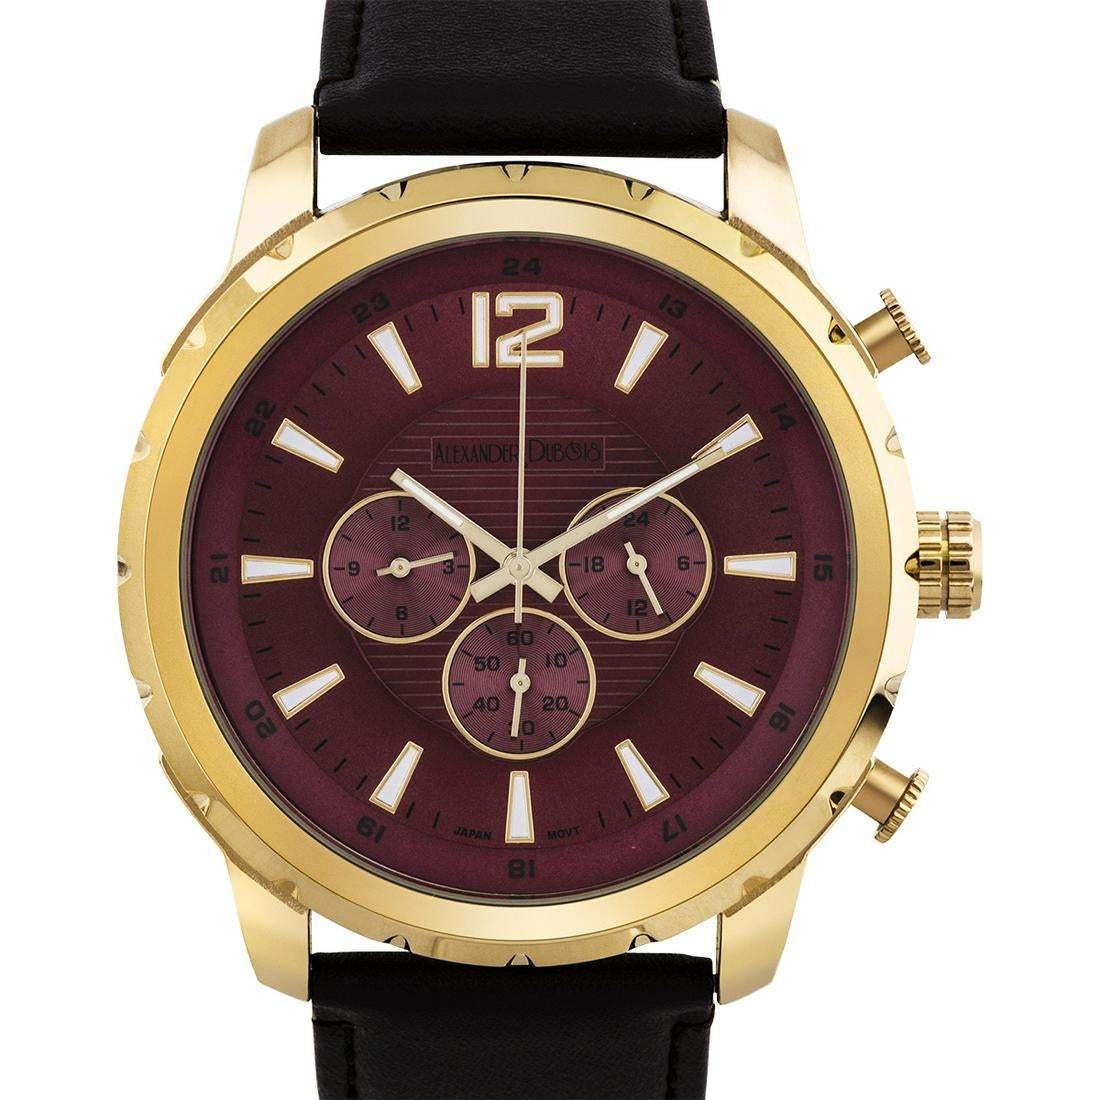 New Alexander Dubois Luxury Multi-Function Men's Watch - Shop Thrifty Treasures